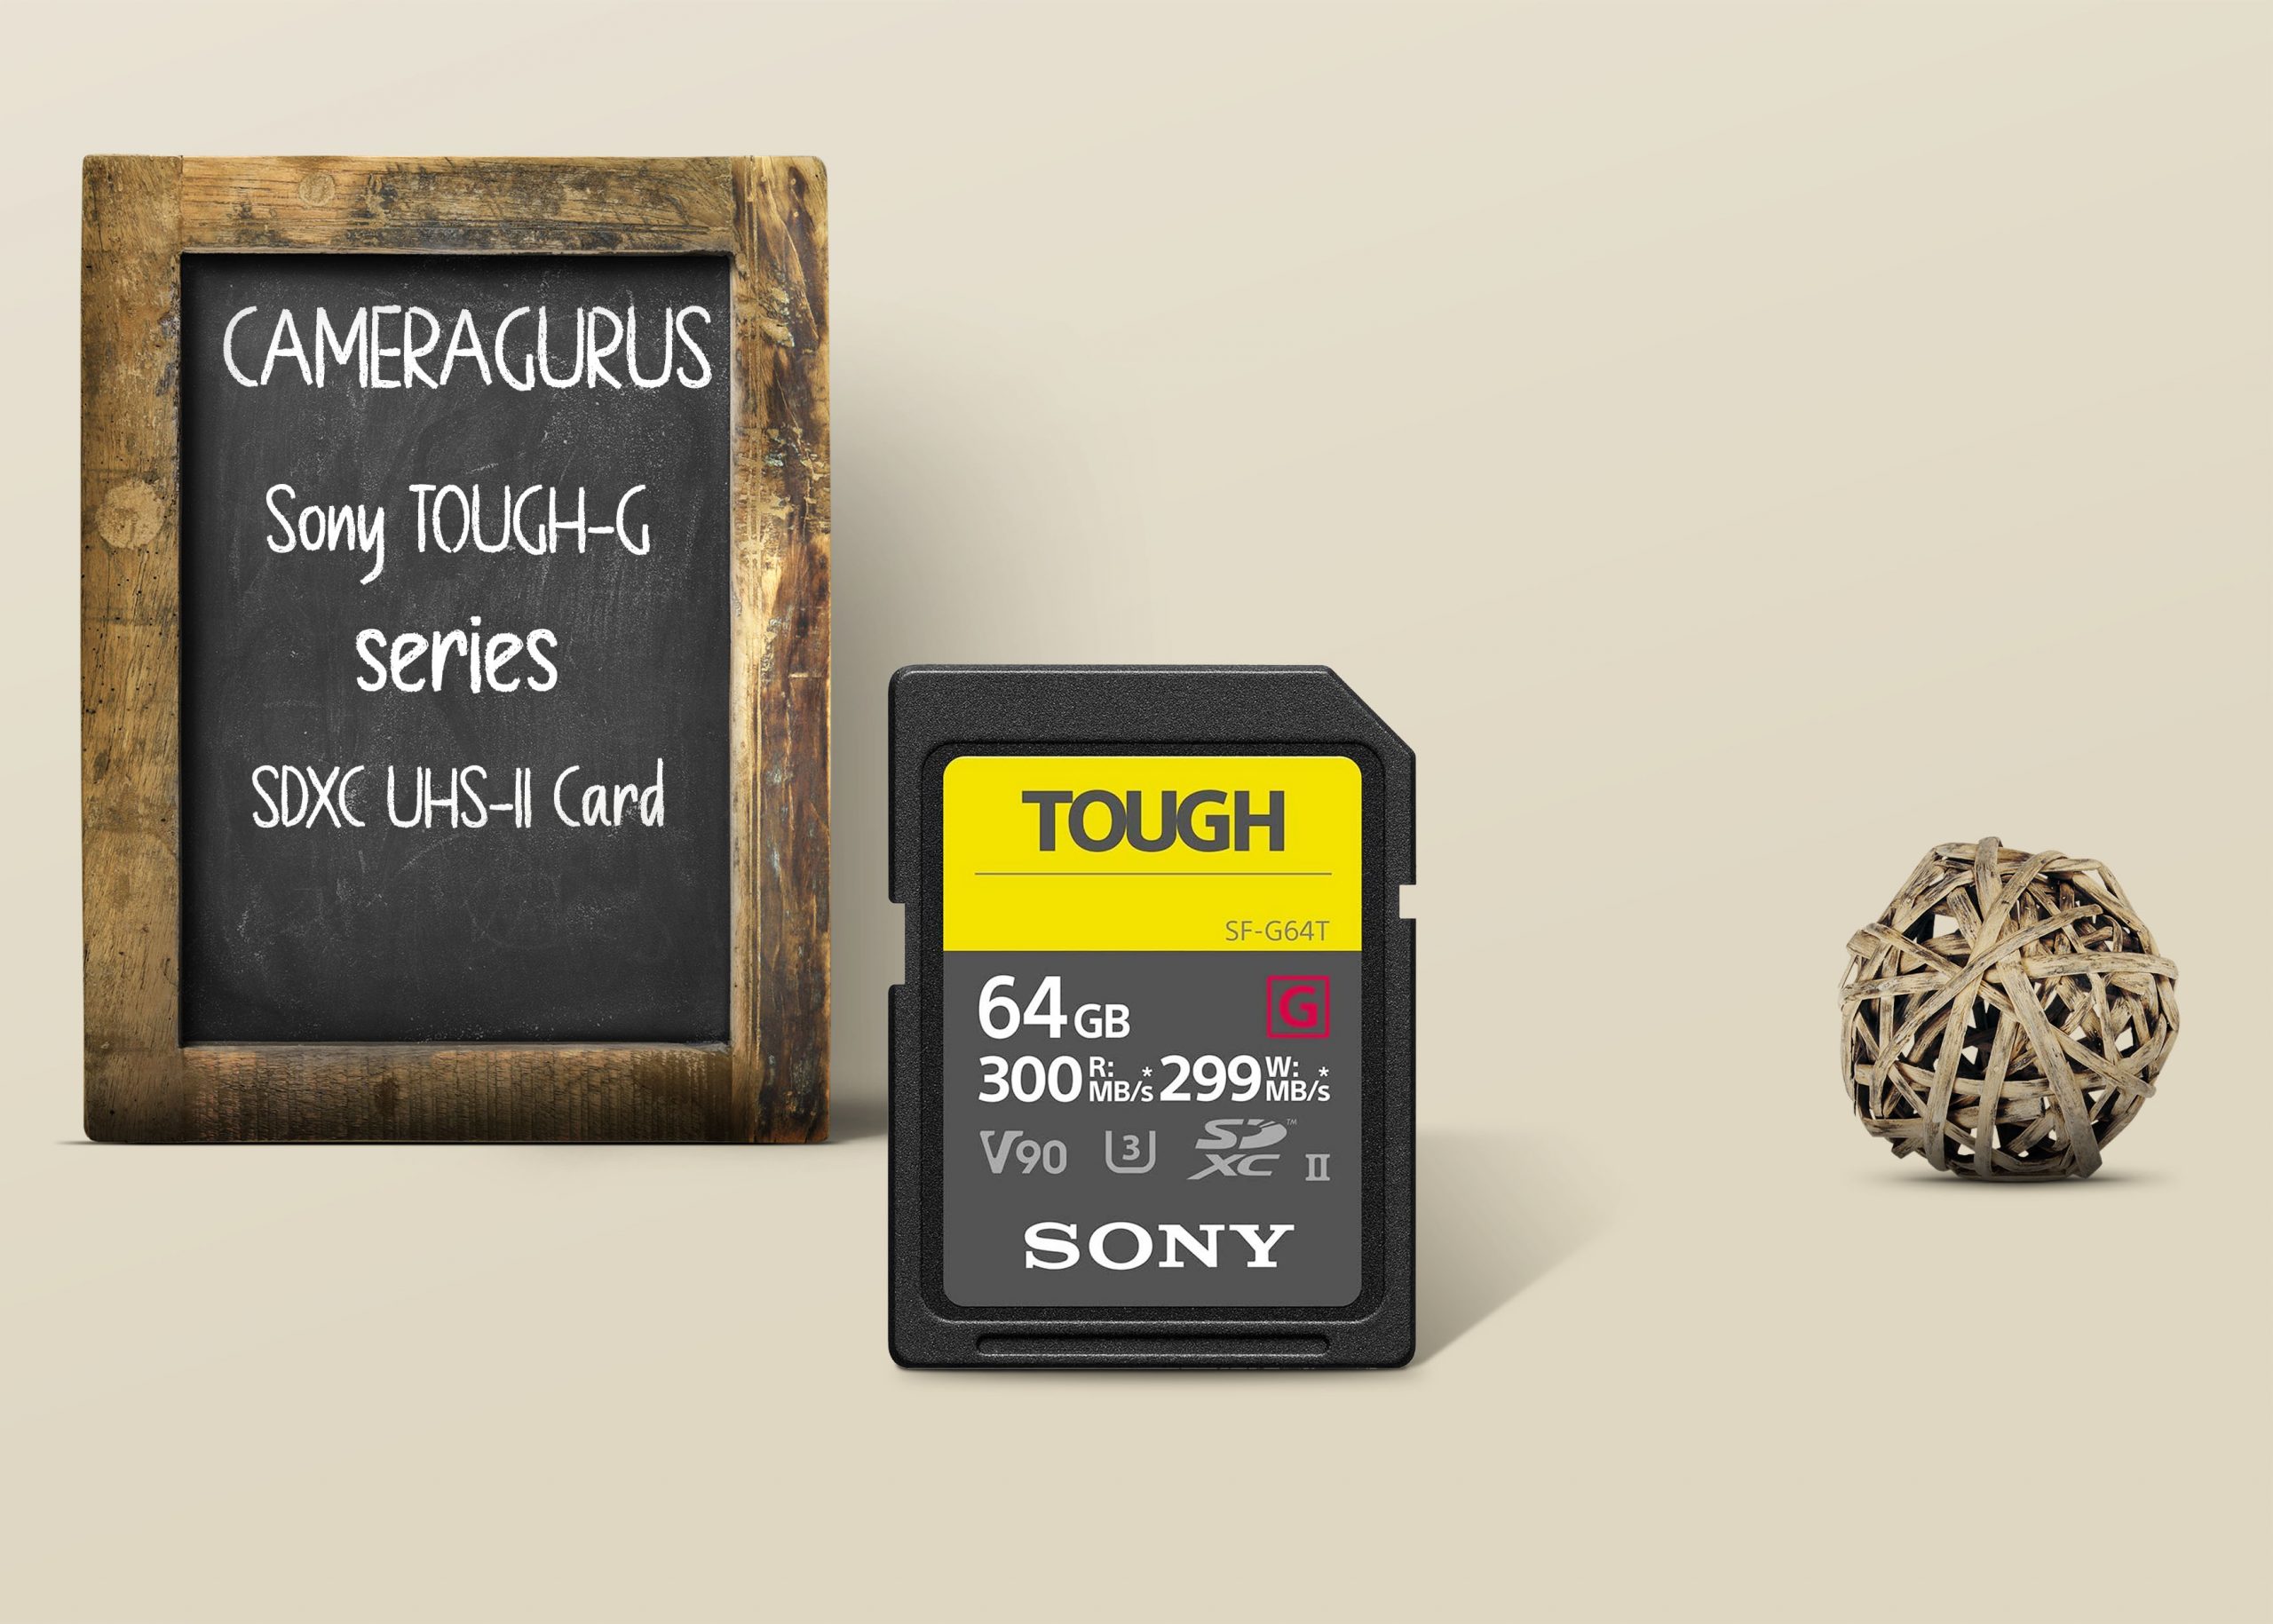 Sony TOUGH G series SDXC UHS II Card